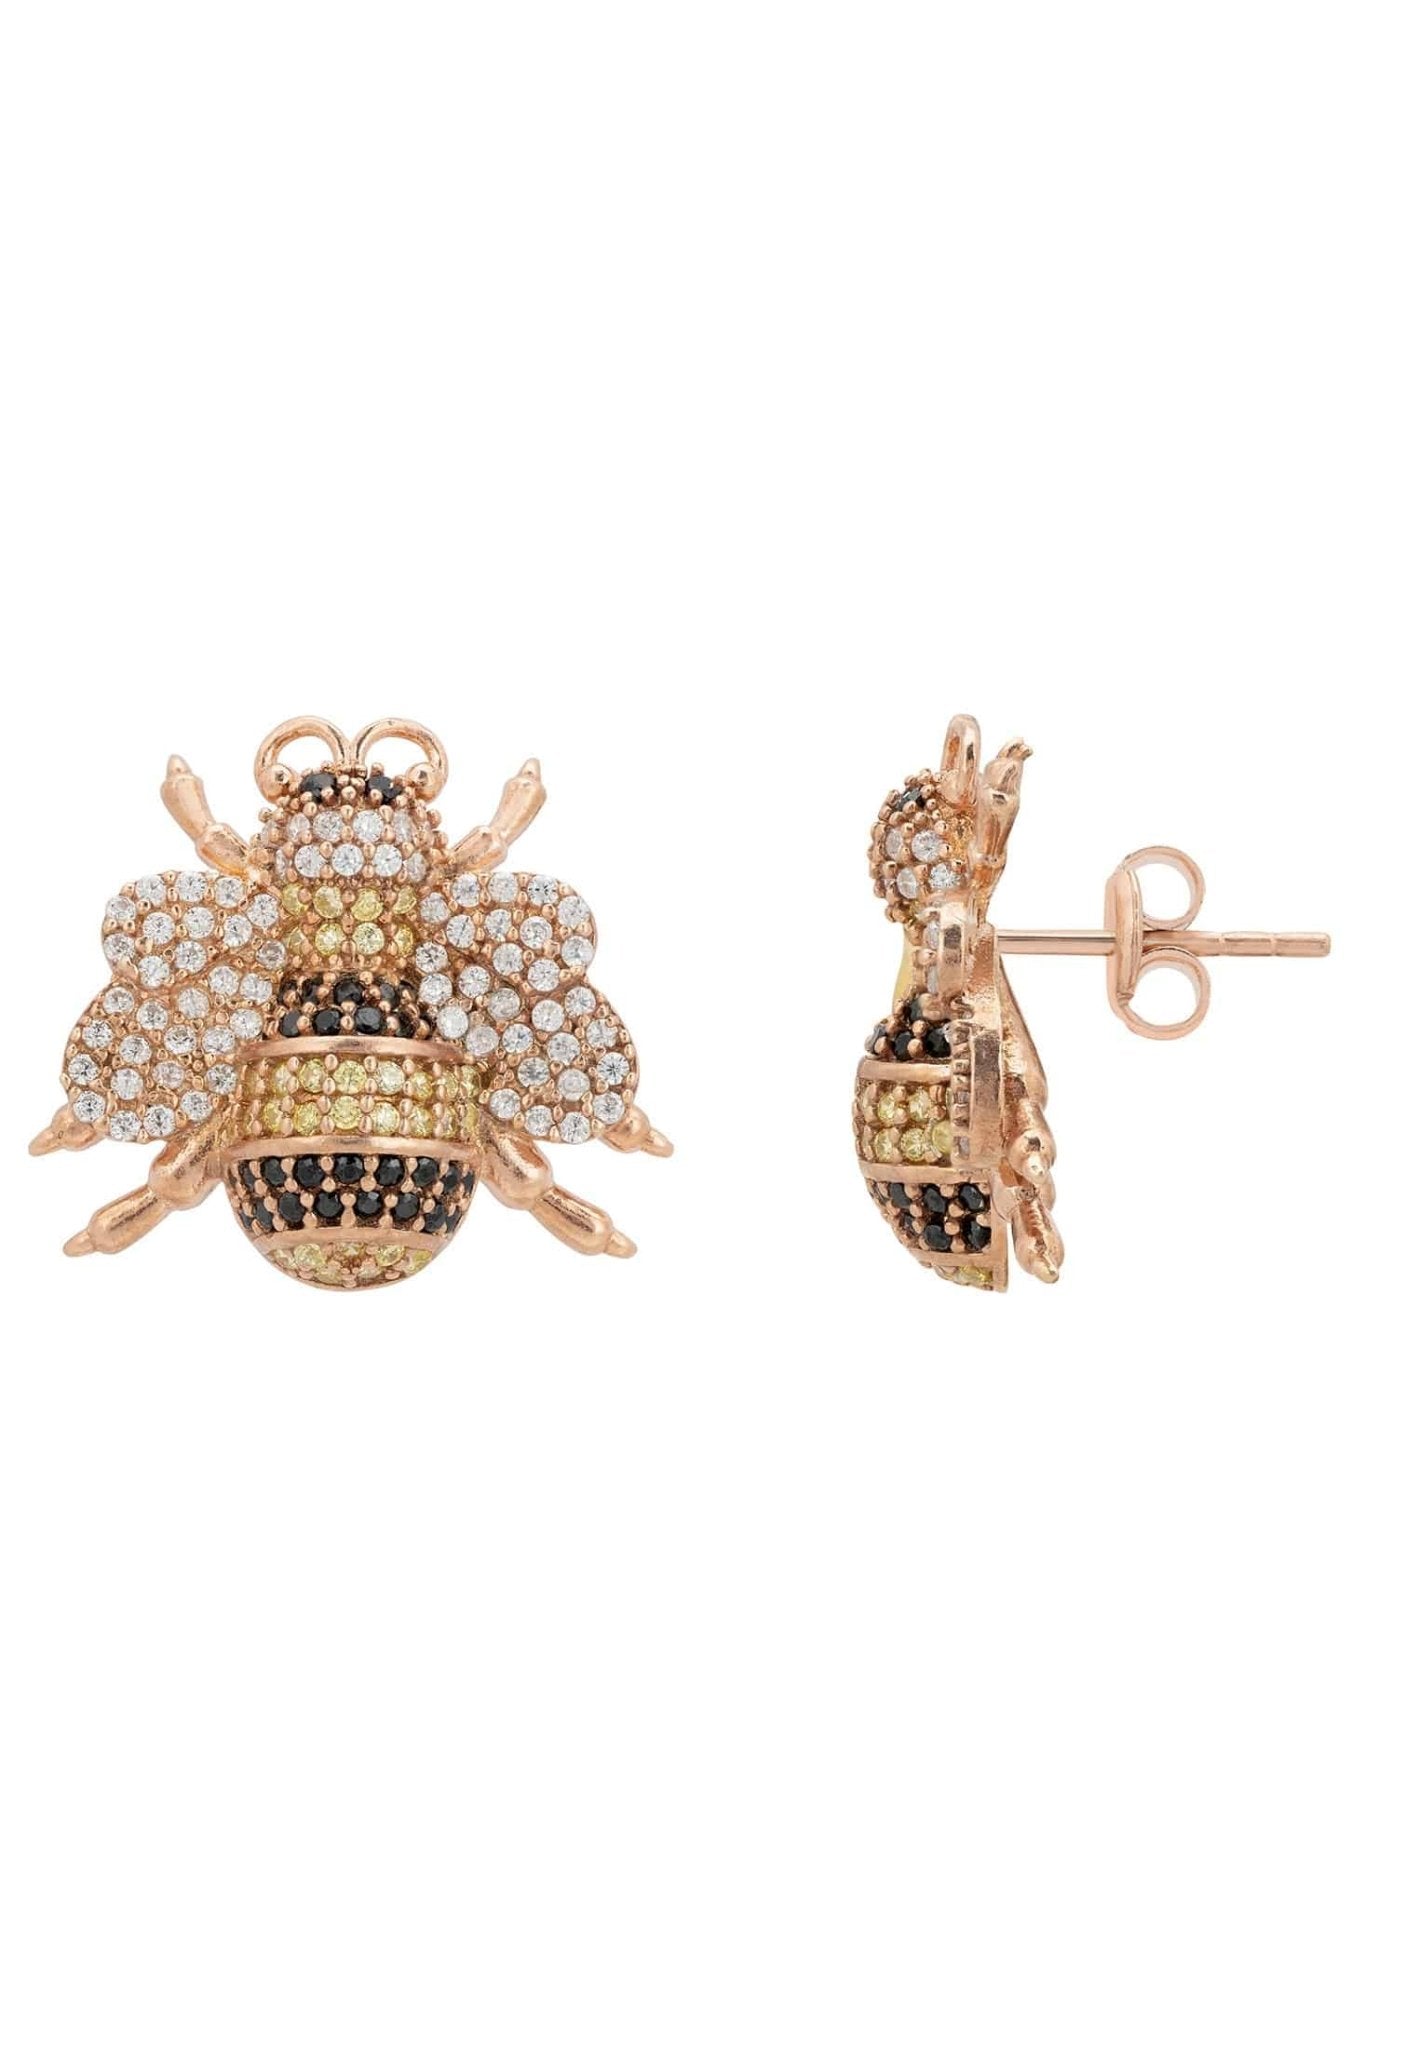 Bumble Bee Stud Earrings Rosegold - LATELITA Earrings